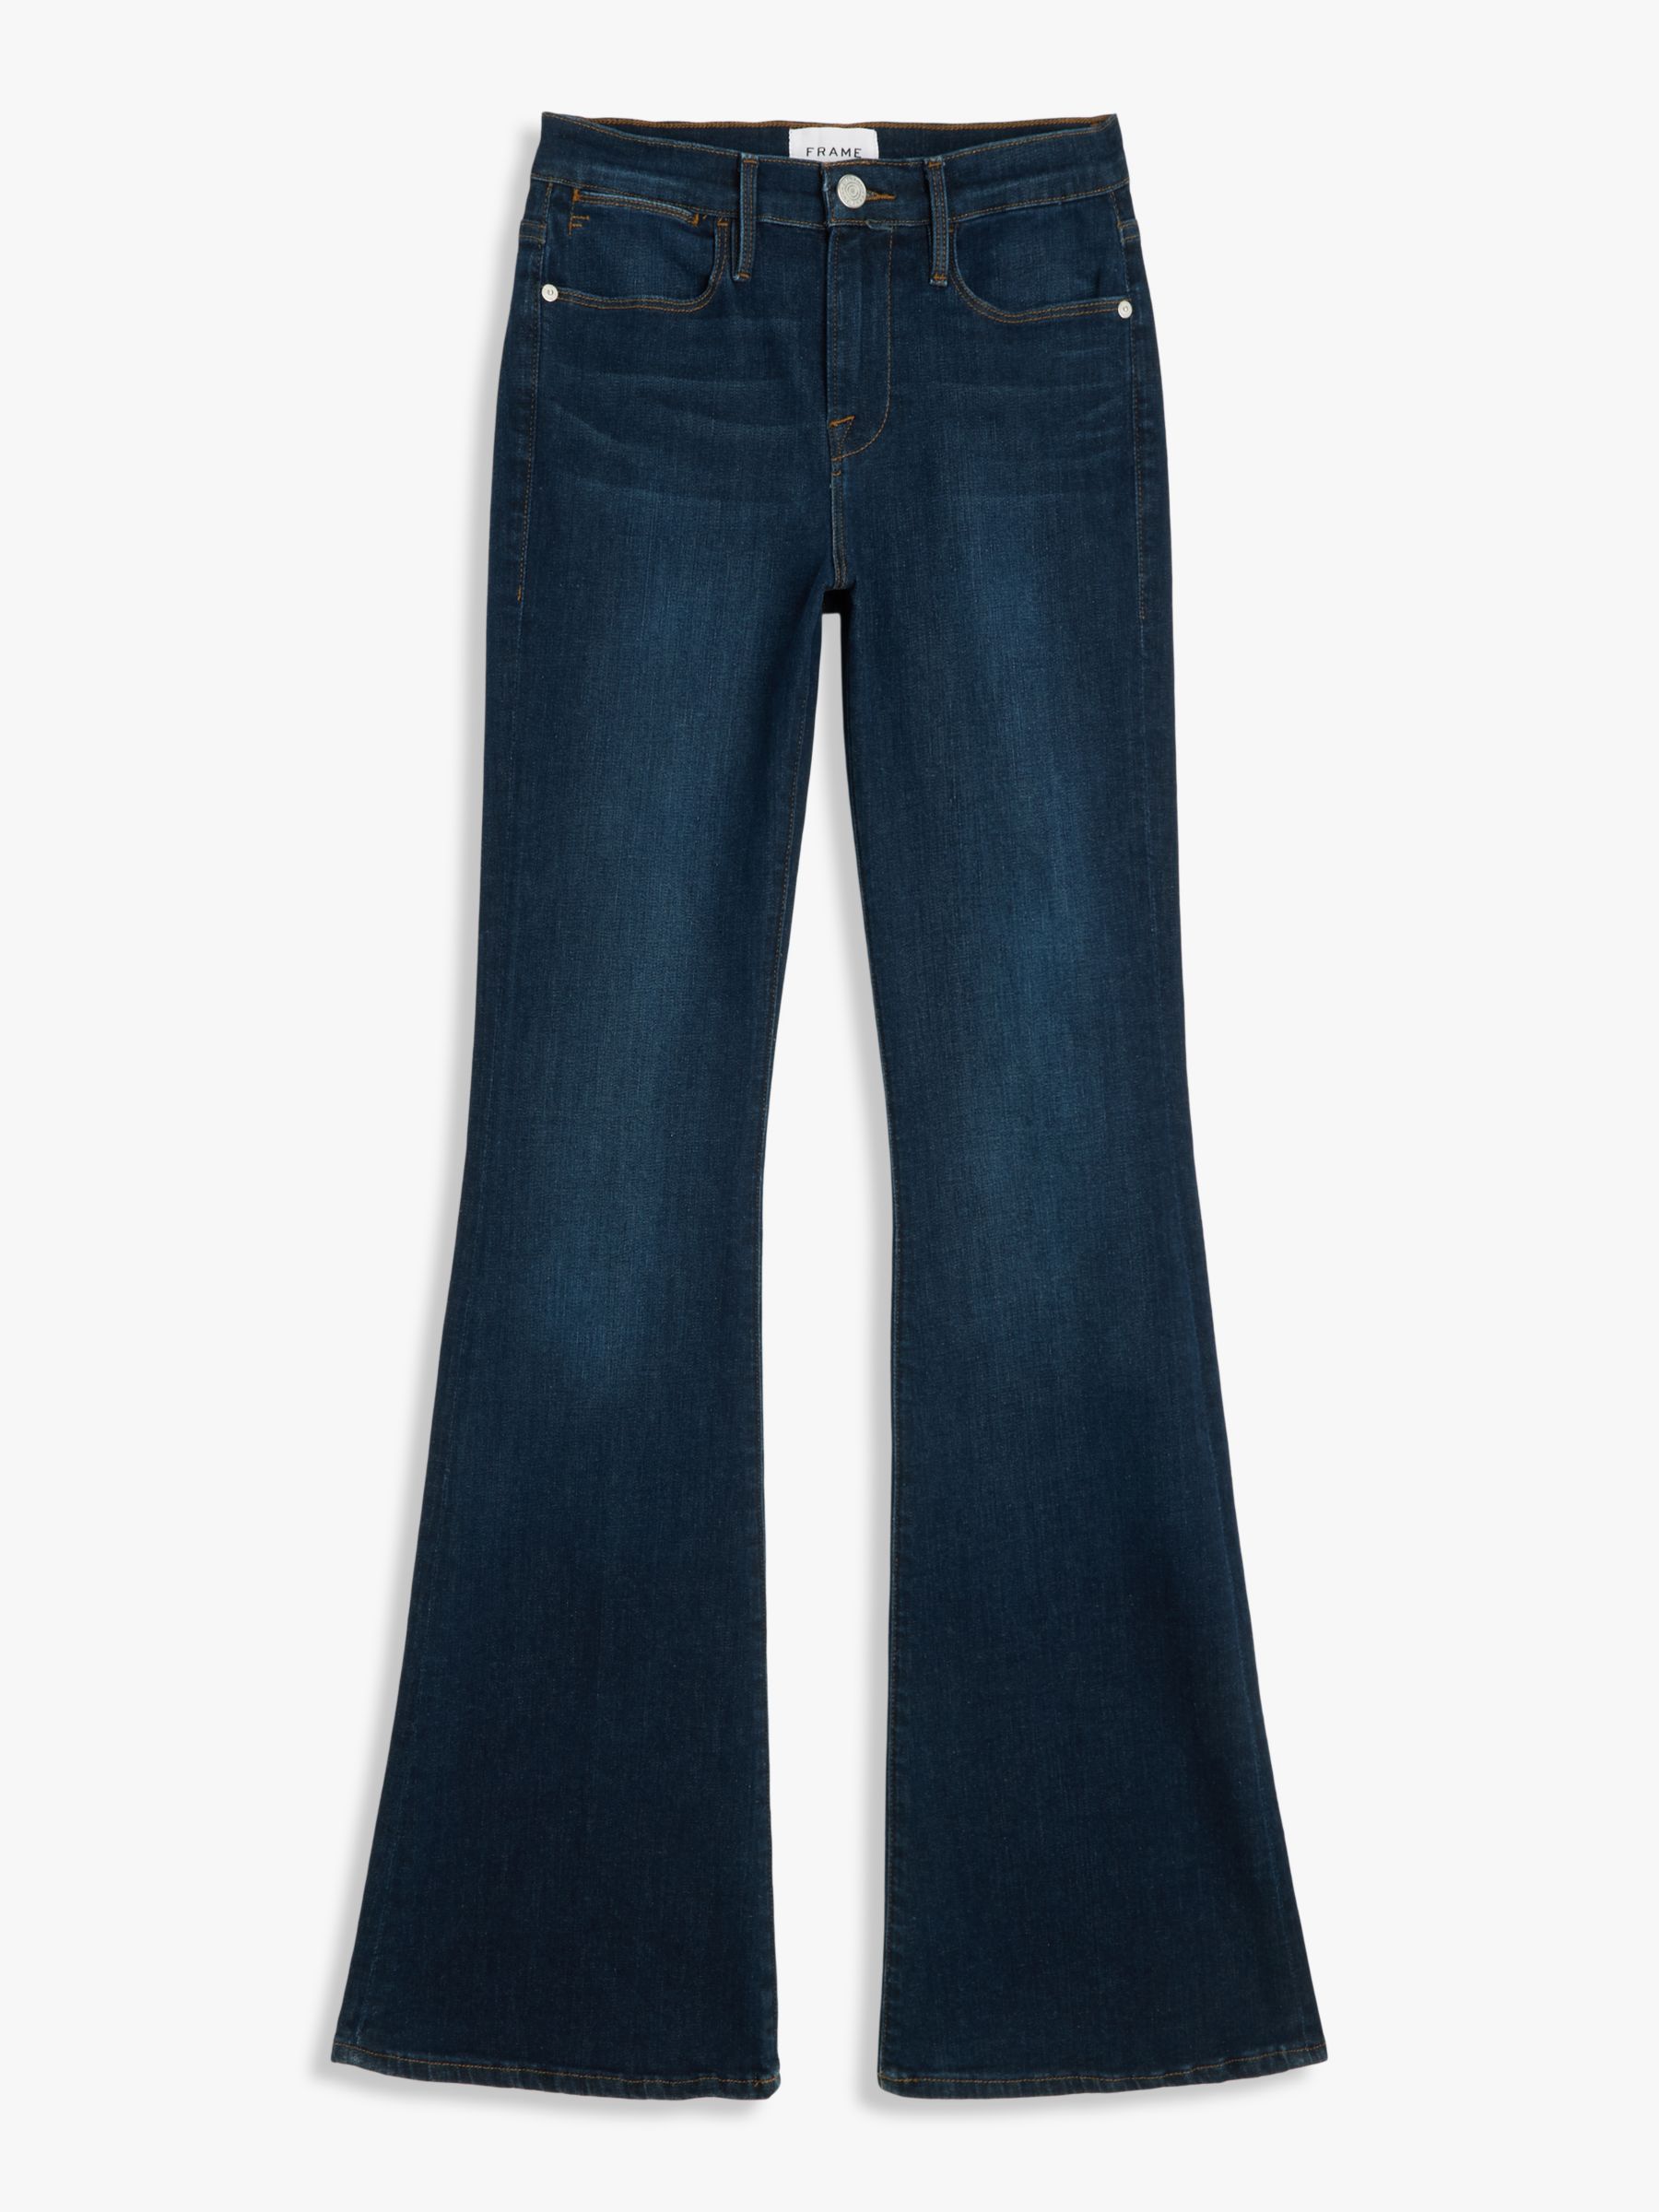 FRAME Le High Flare Jeans, Sutherland, 24